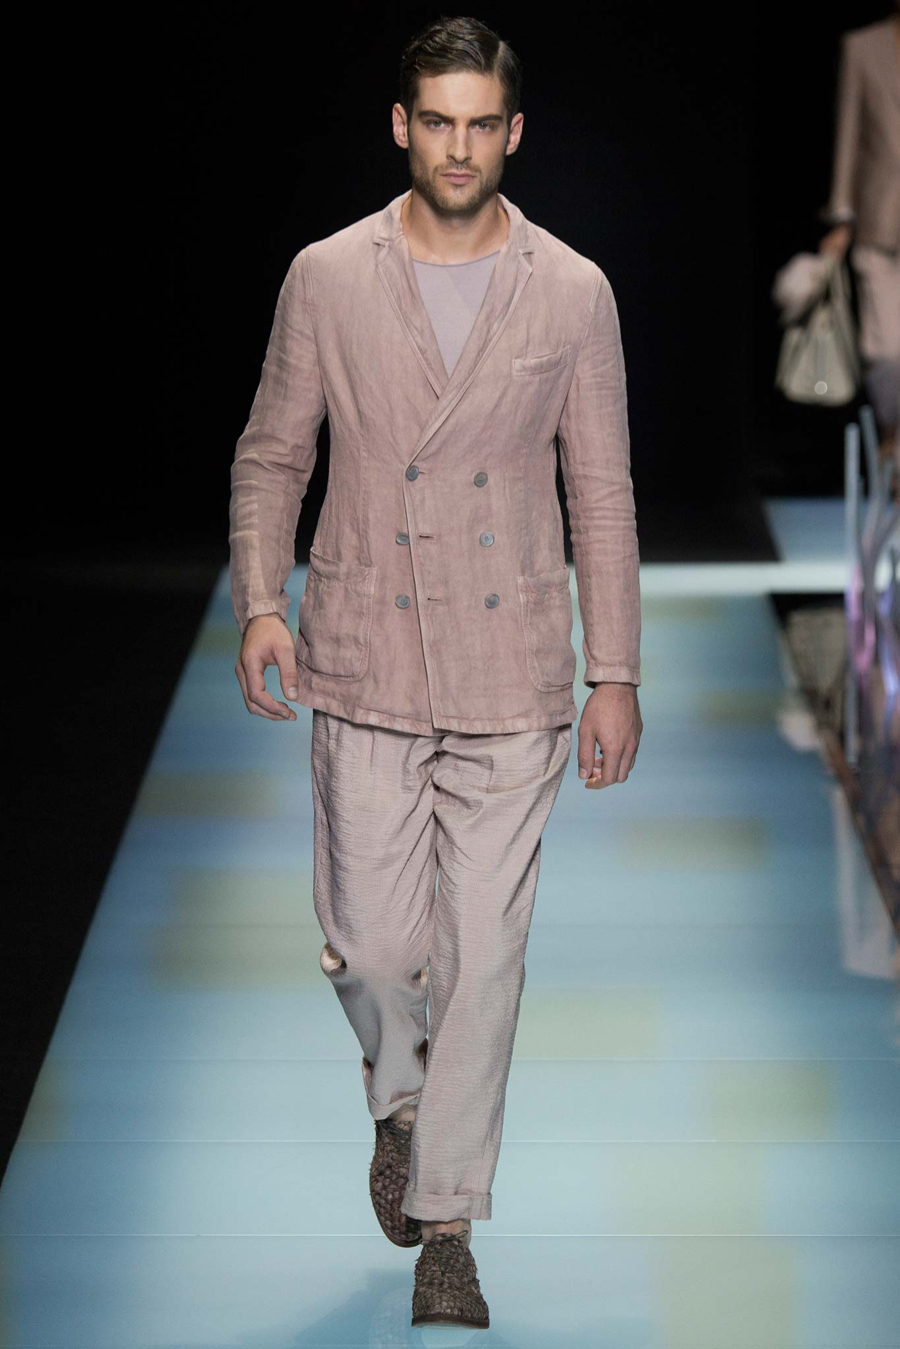 Giorgio Armani Spring Summer 2016 Menswear Collection Milan Fashion Week 019